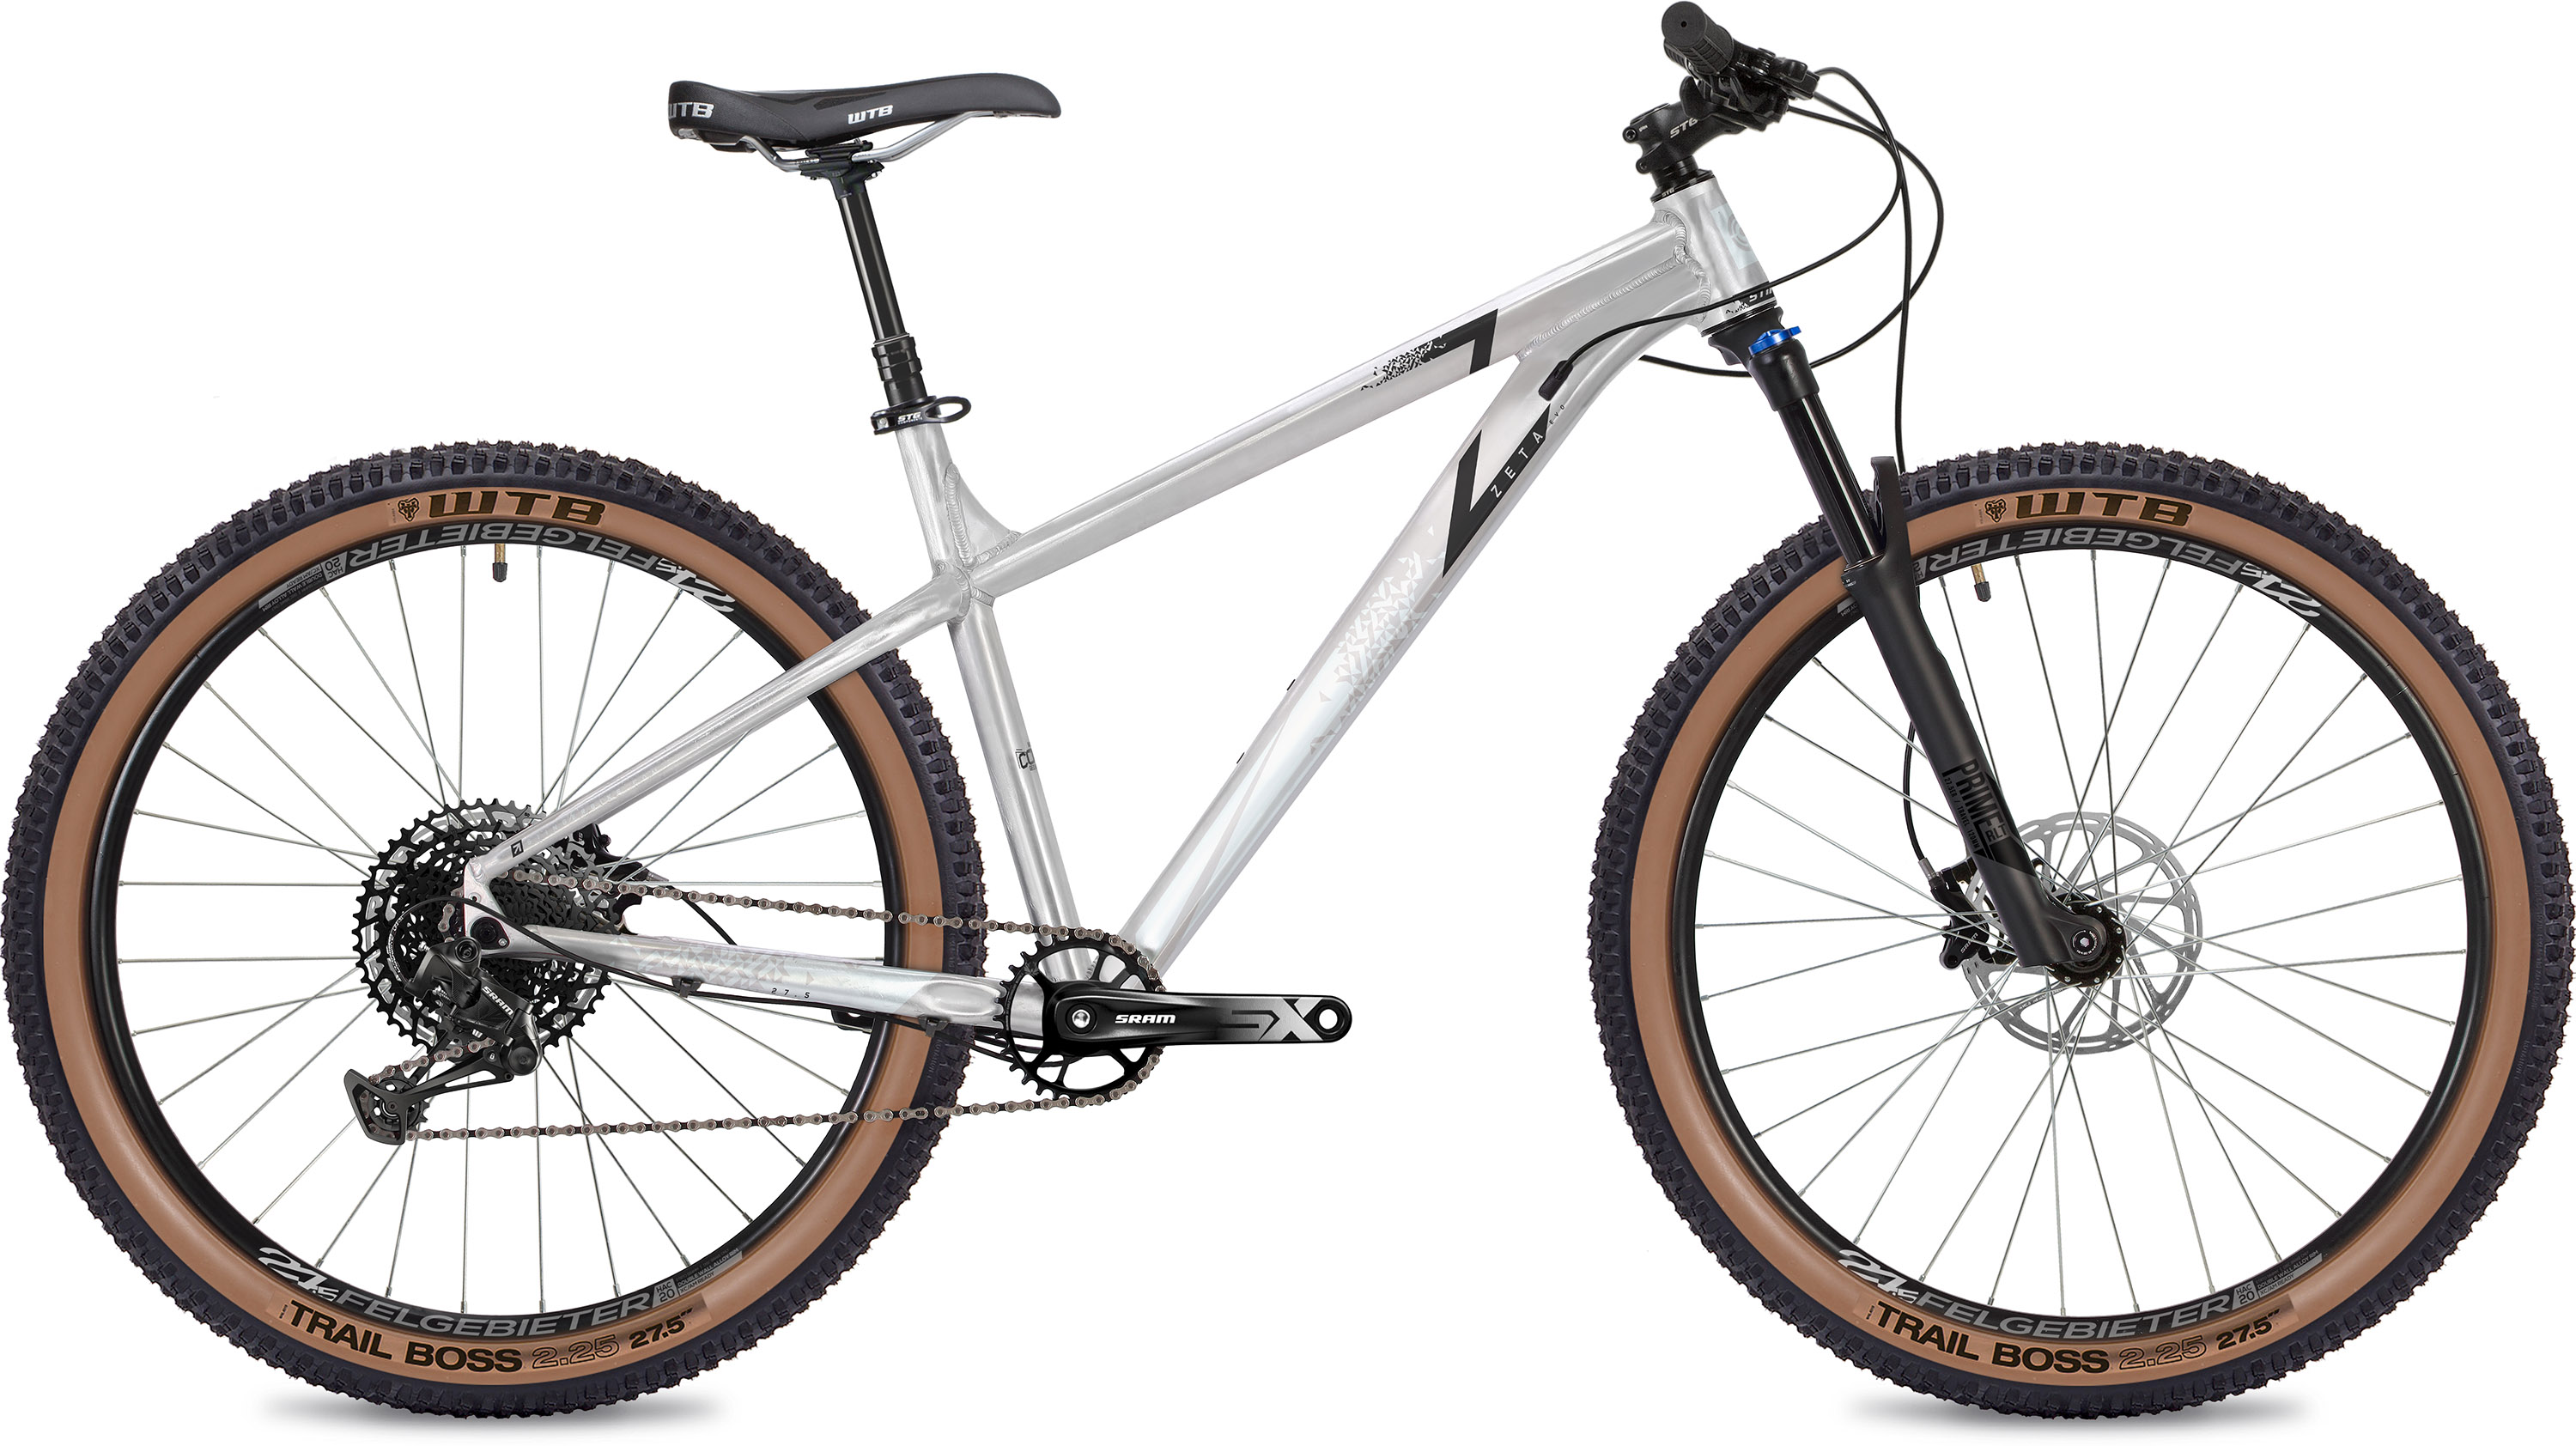  Отзывы о Горном велосипеде Stinger Zeta Evo 29 2020